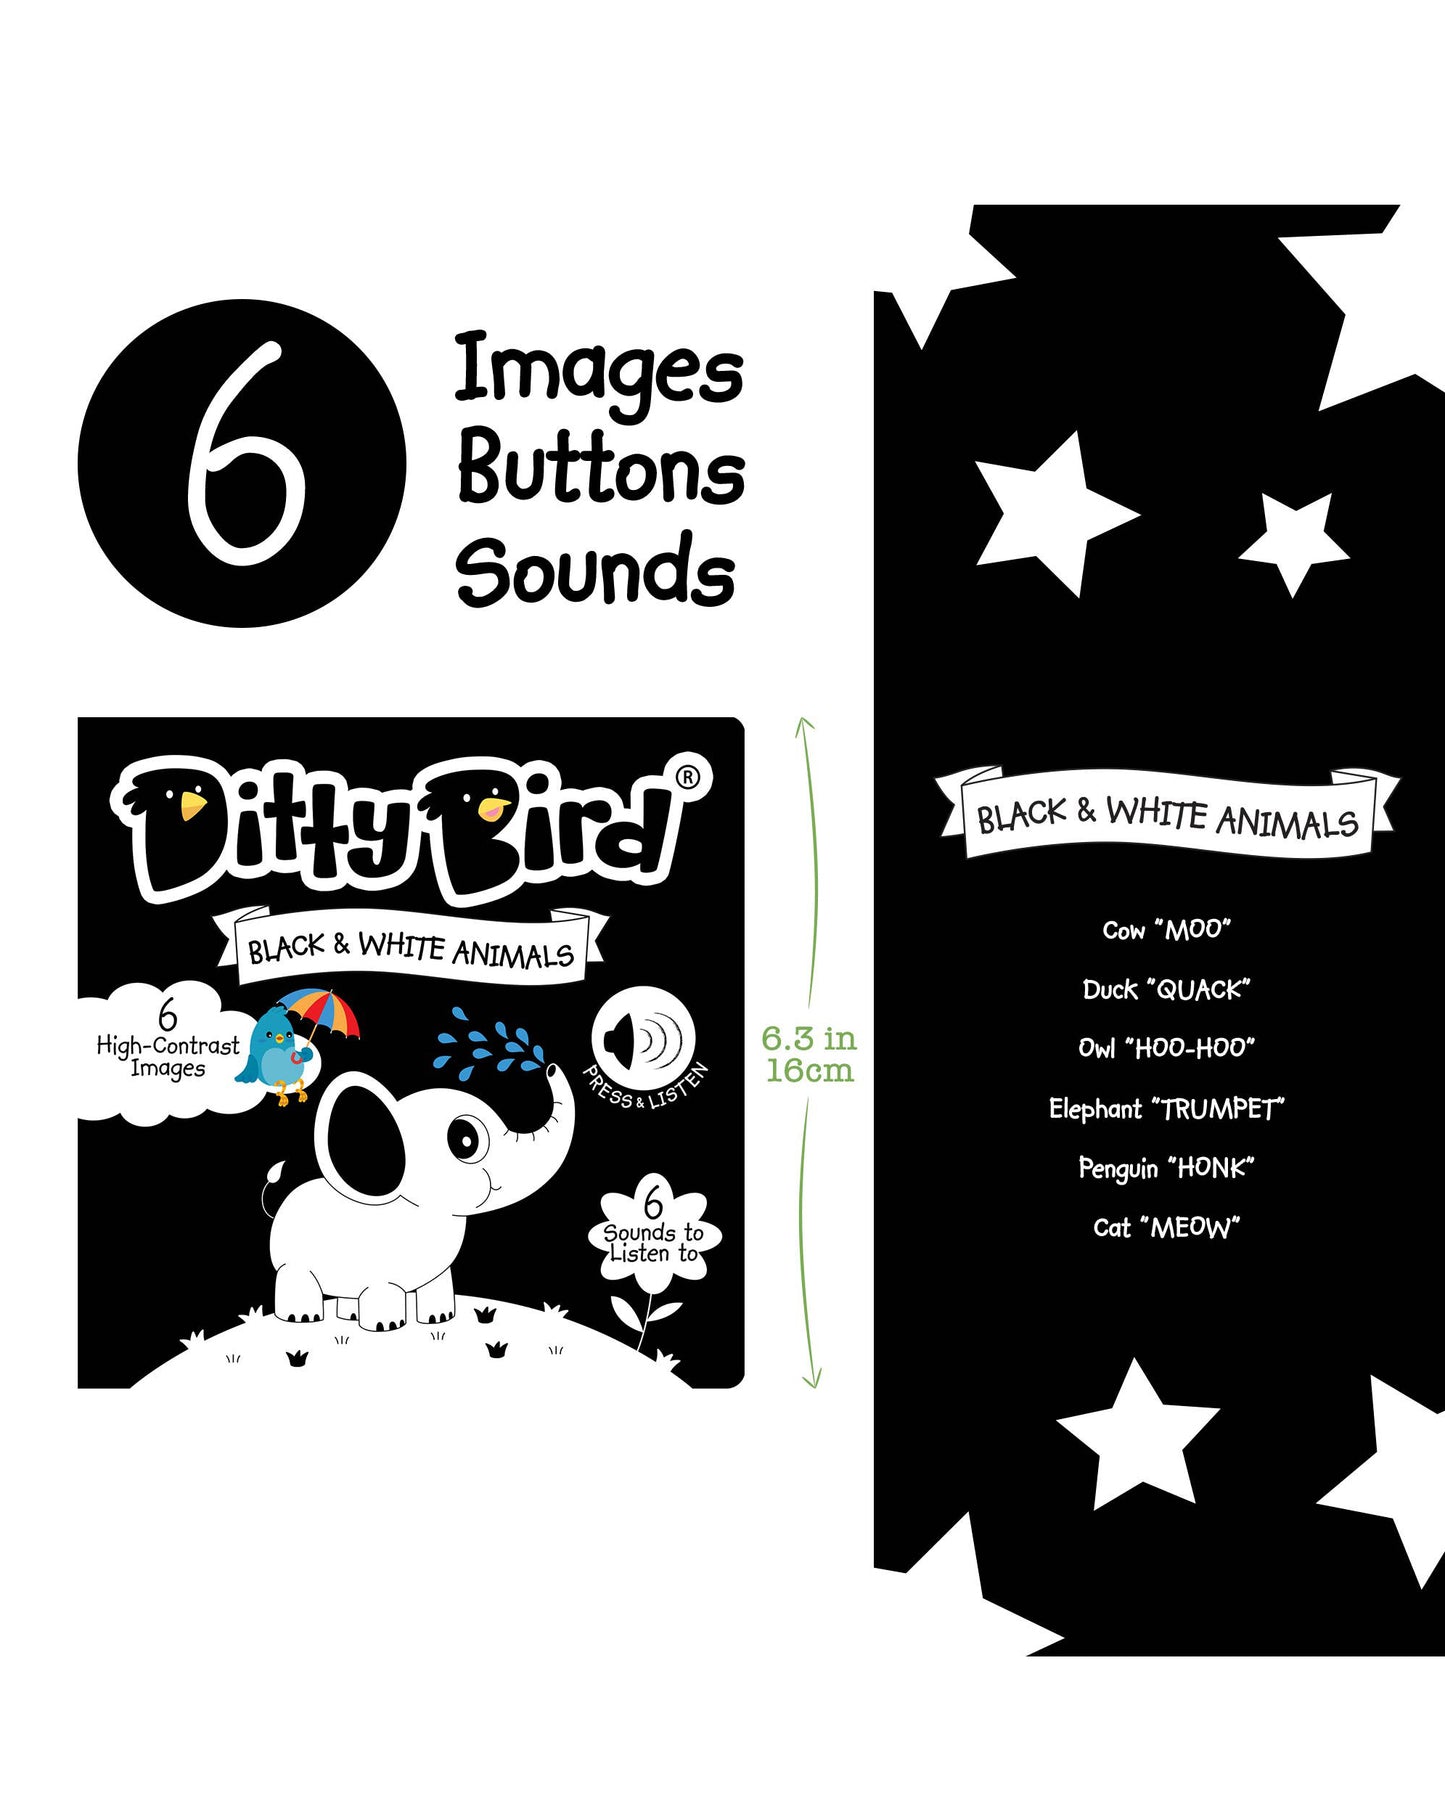 Ditty Bird Black and White Sound book - New born